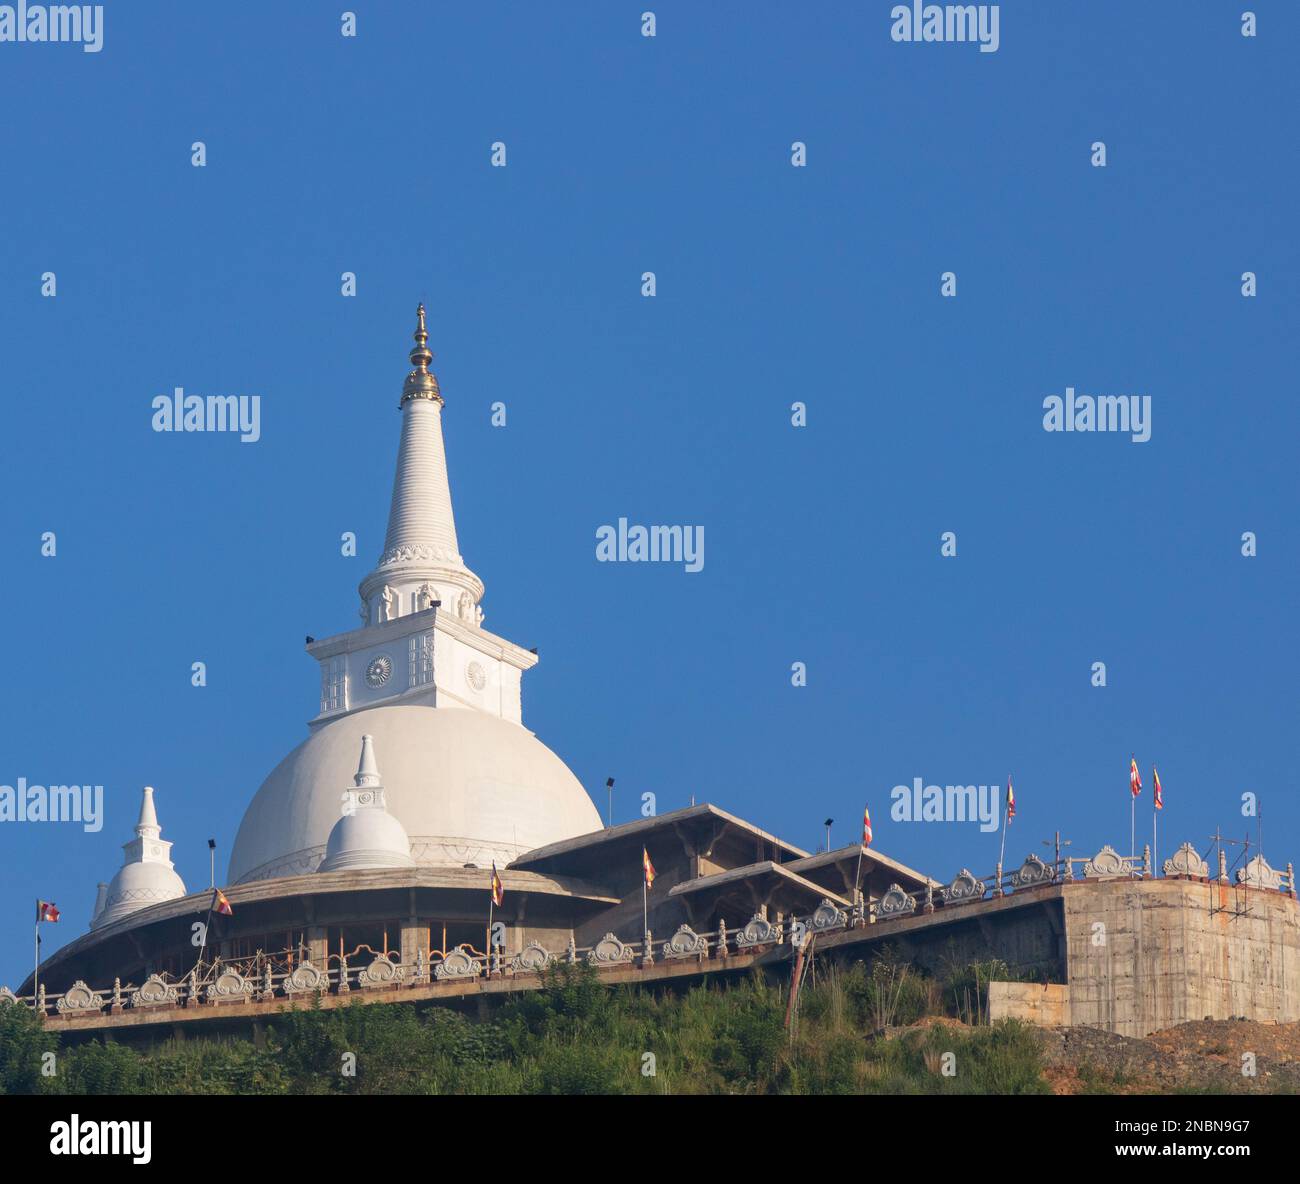 Wunderschöne buddhistische Pagode auf dem Hügel unter dem blauen Himmel. Kubalwela, Bandarawela, sri lanka Stockfoto